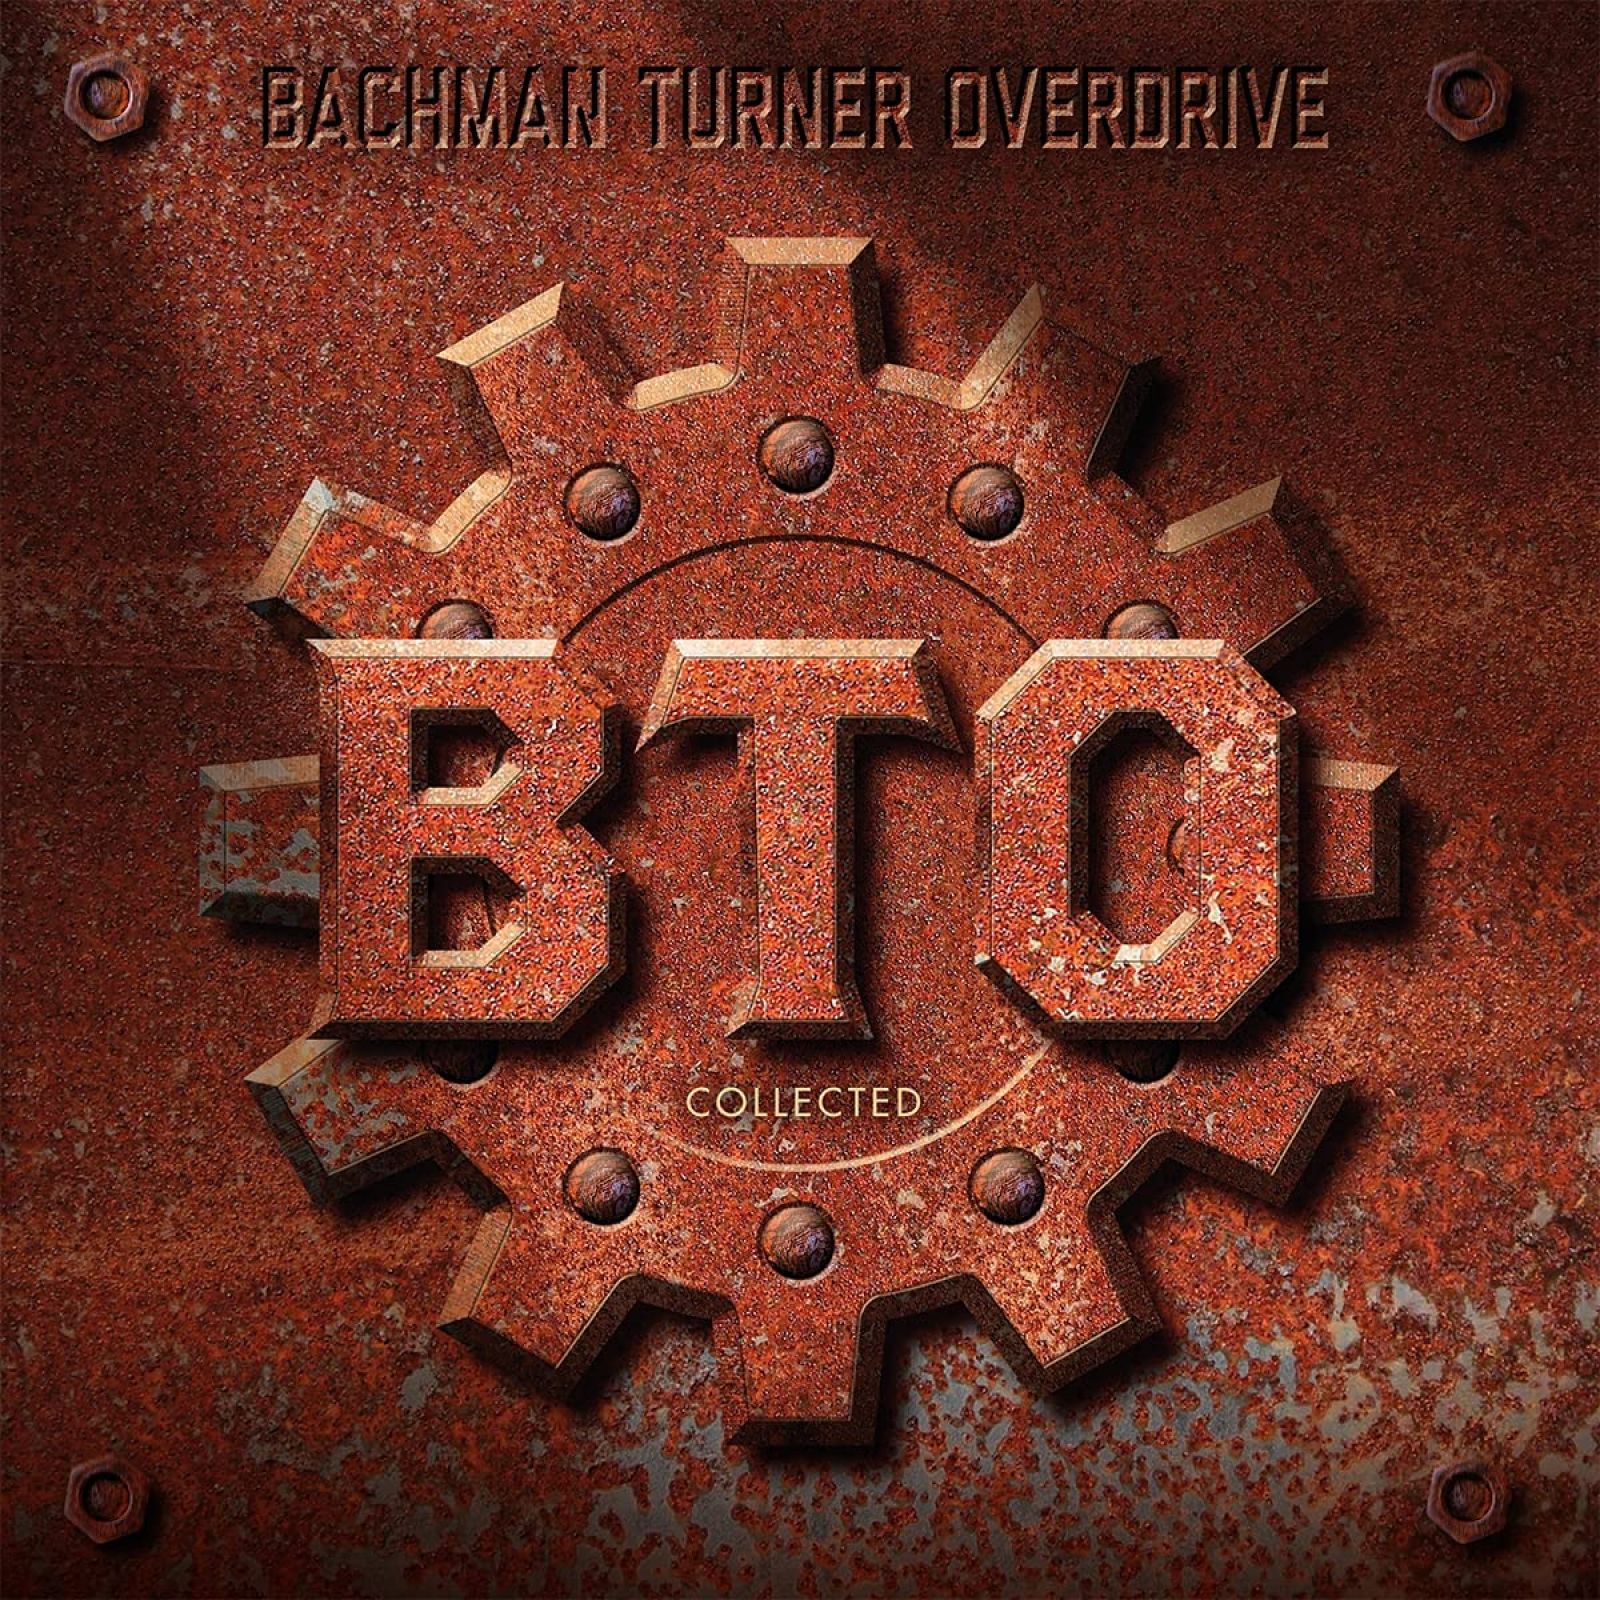 Виниловая пластинка Bachman Turner Overdrive, Collected: Greatest Songs (0600753911327) bachman turner overdrive bachman turner overdrive 40th anniversary single disc